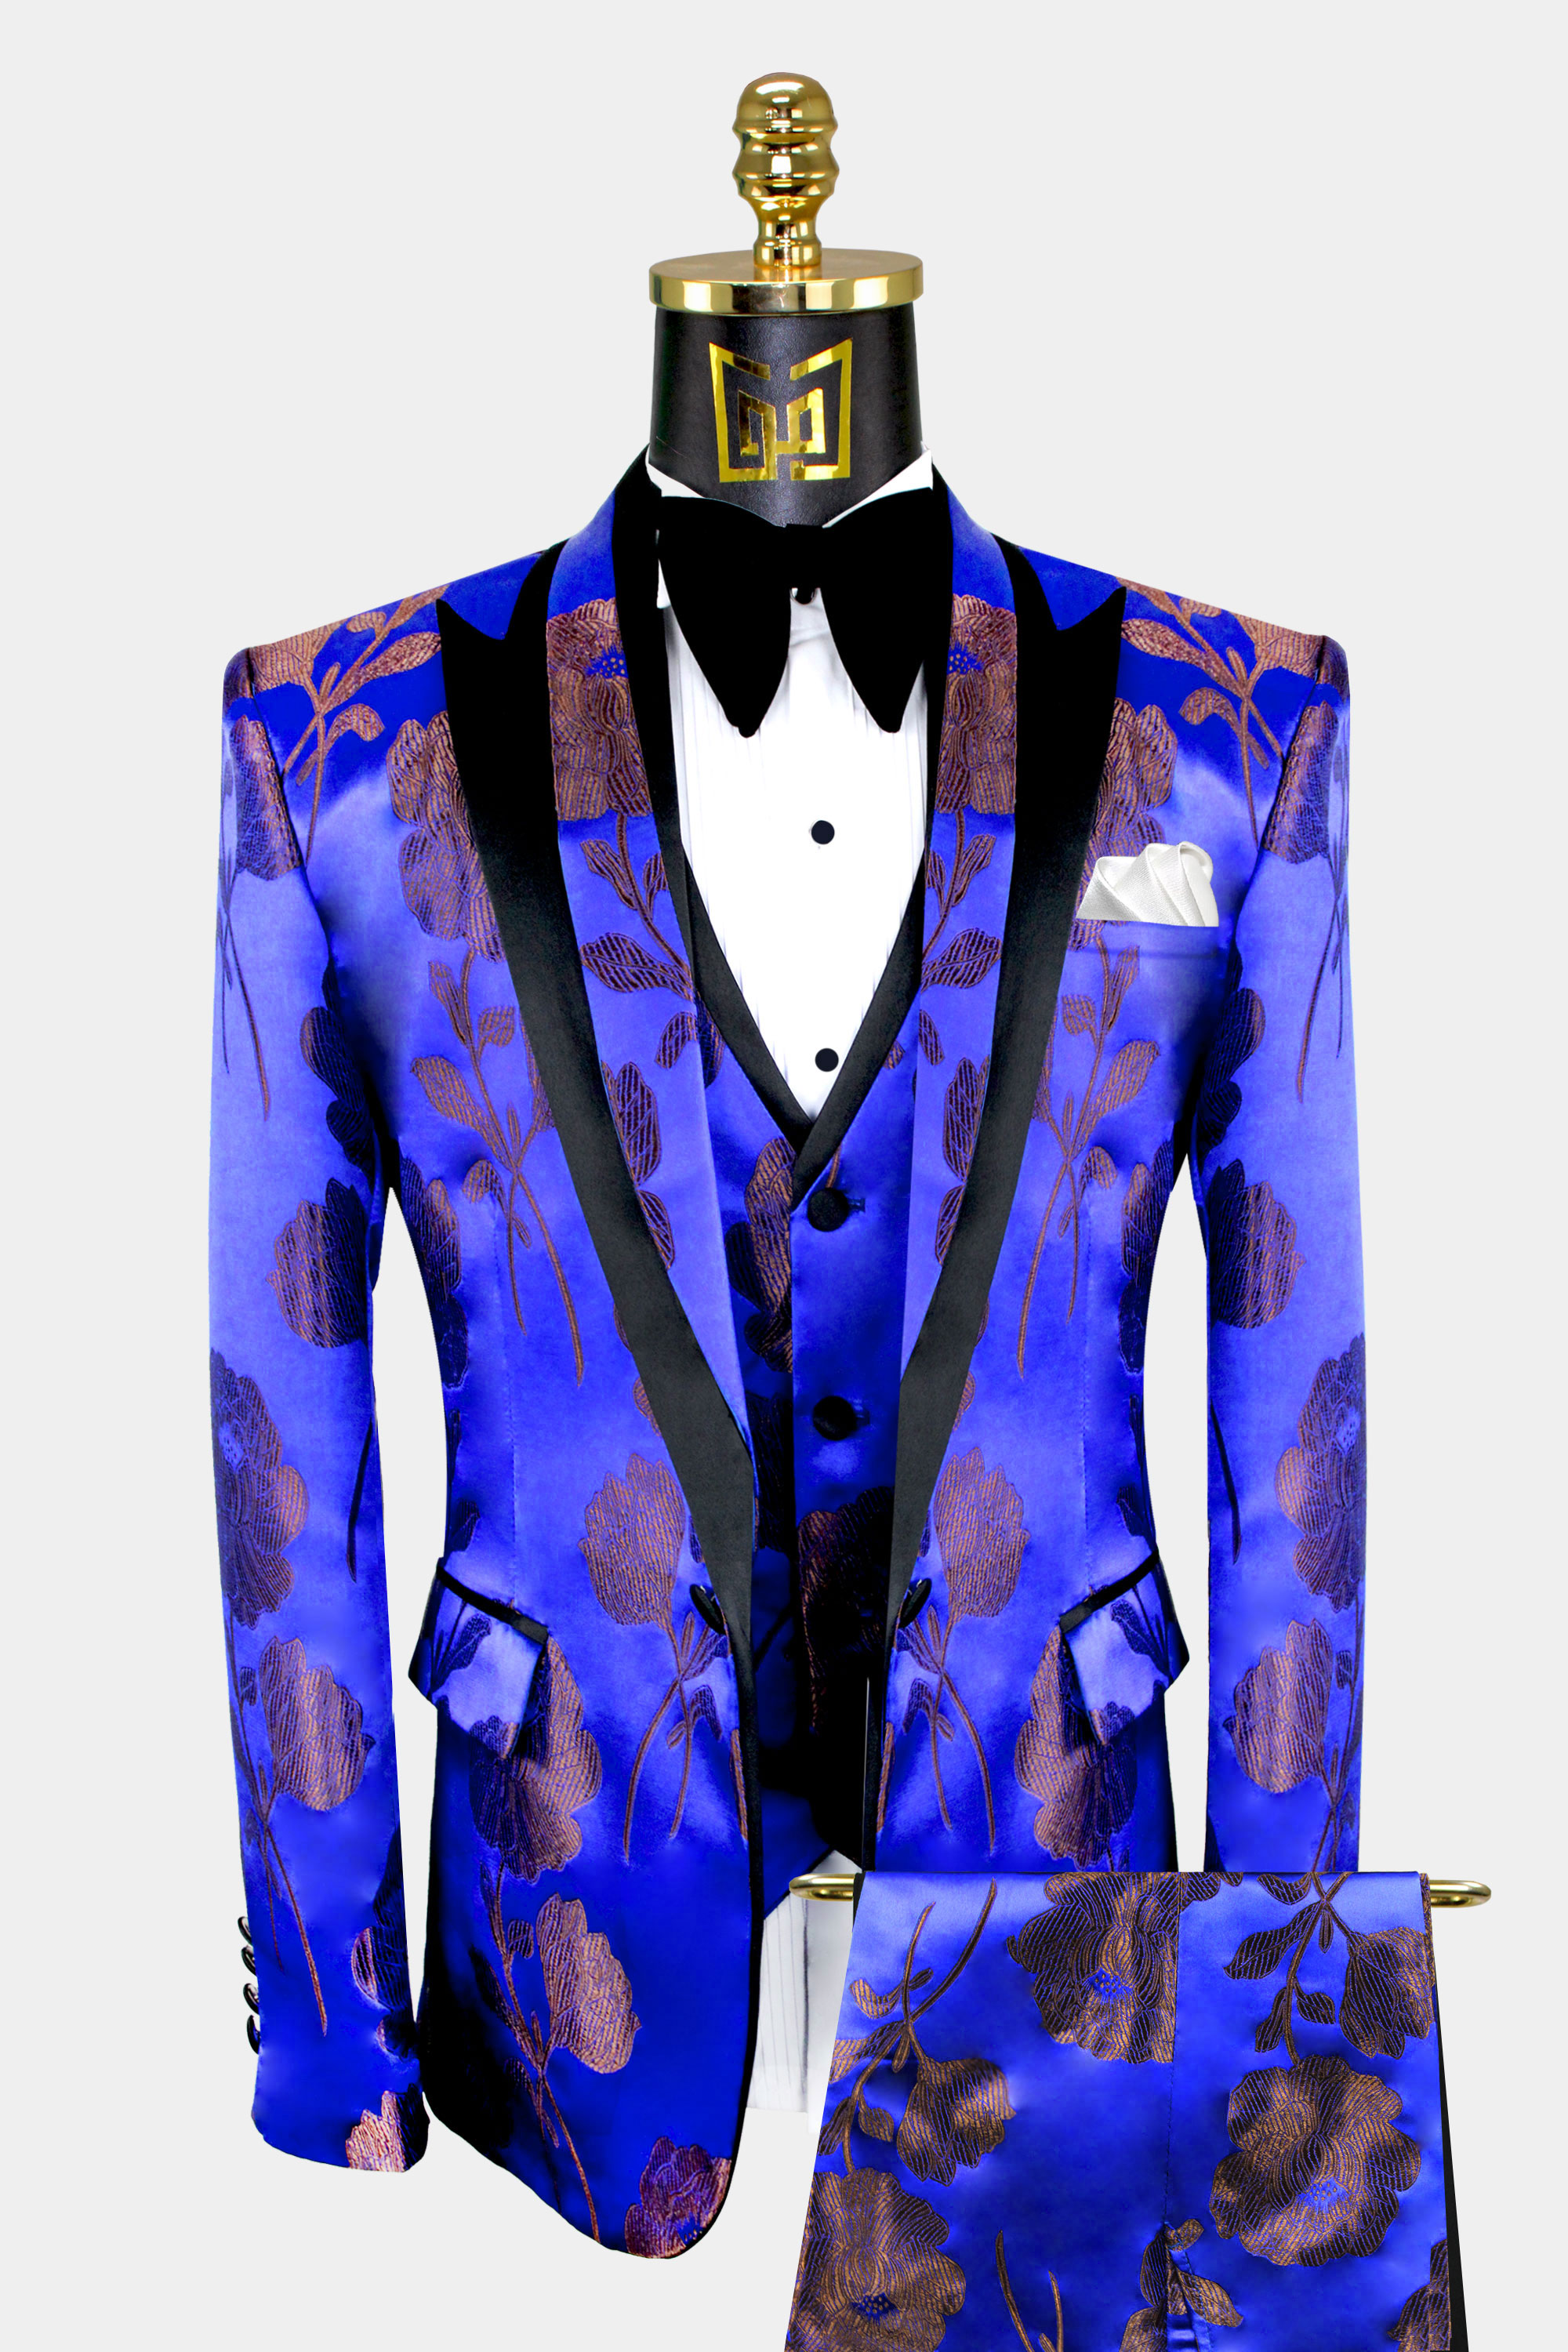 Mens-Royal-Blue-Floral-Tuxedo-Wedding-Groom-Prom-Suit-from-Gentlemansgurur.com